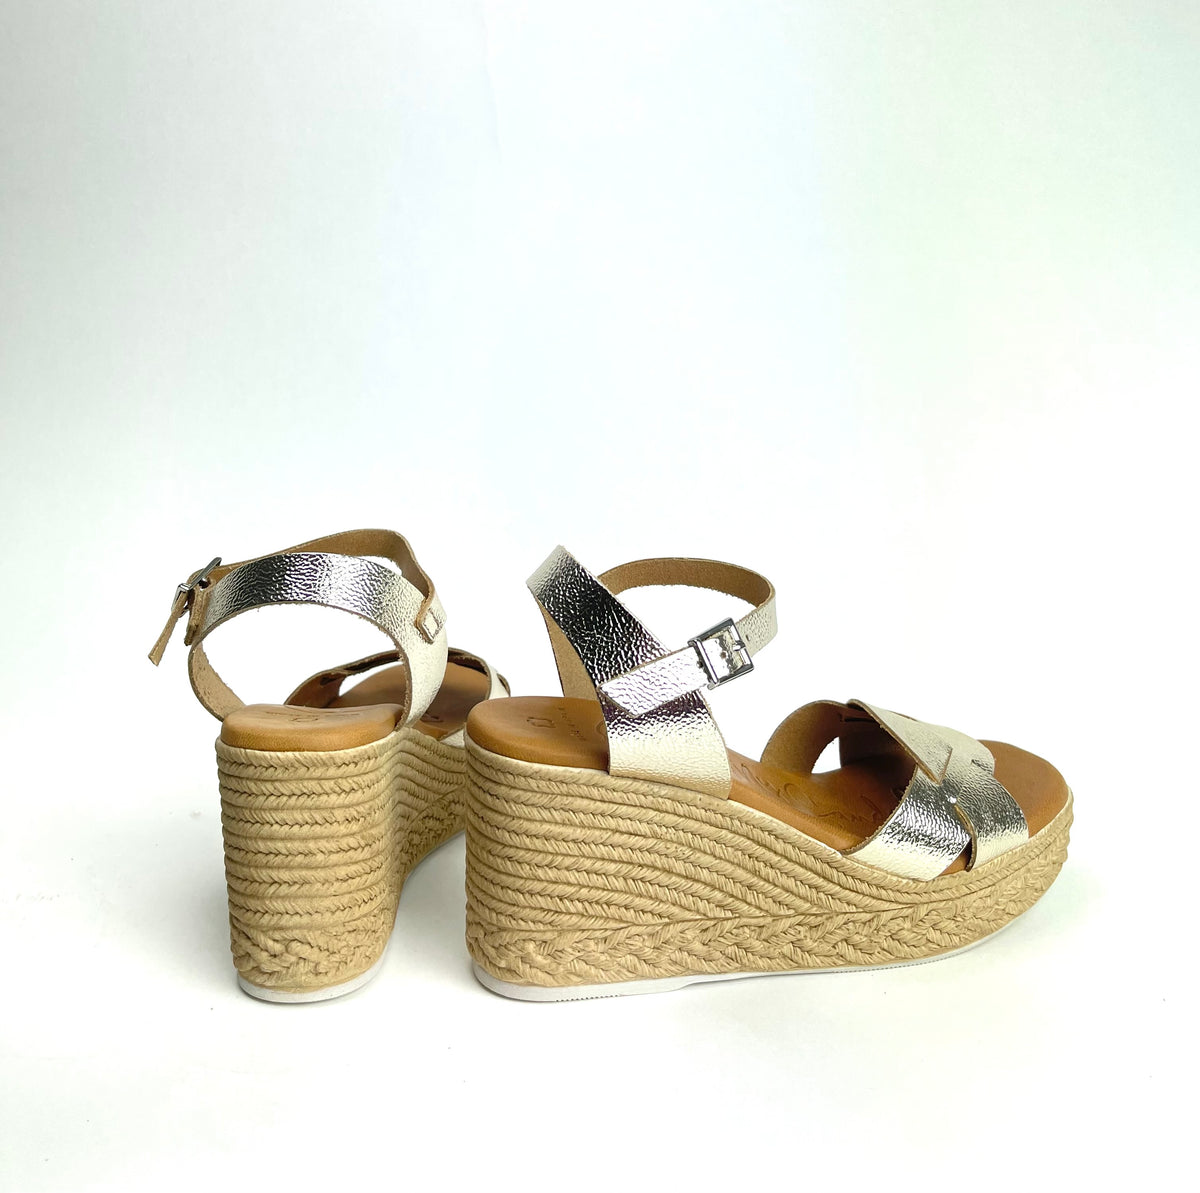 Oh My Sandals - 5460 Gold Metallic Wedge Sandal